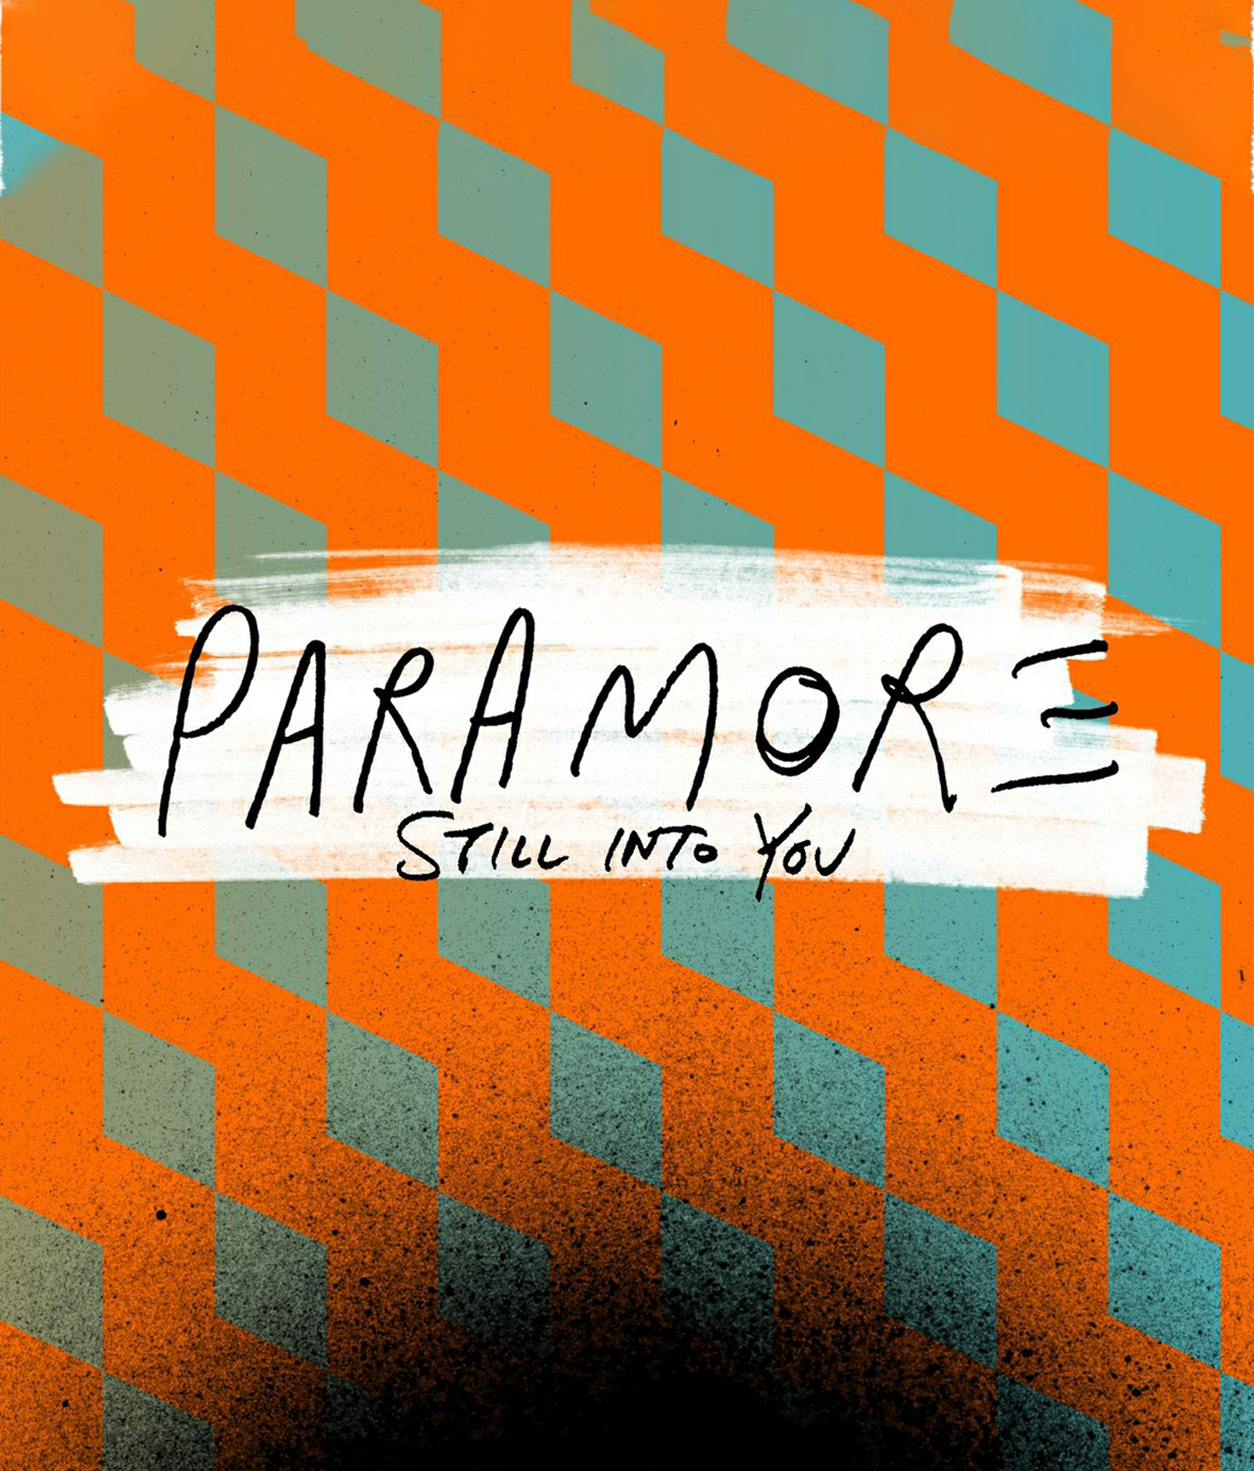 Paramore Still Into You Song Lyrics Wall Sticker 